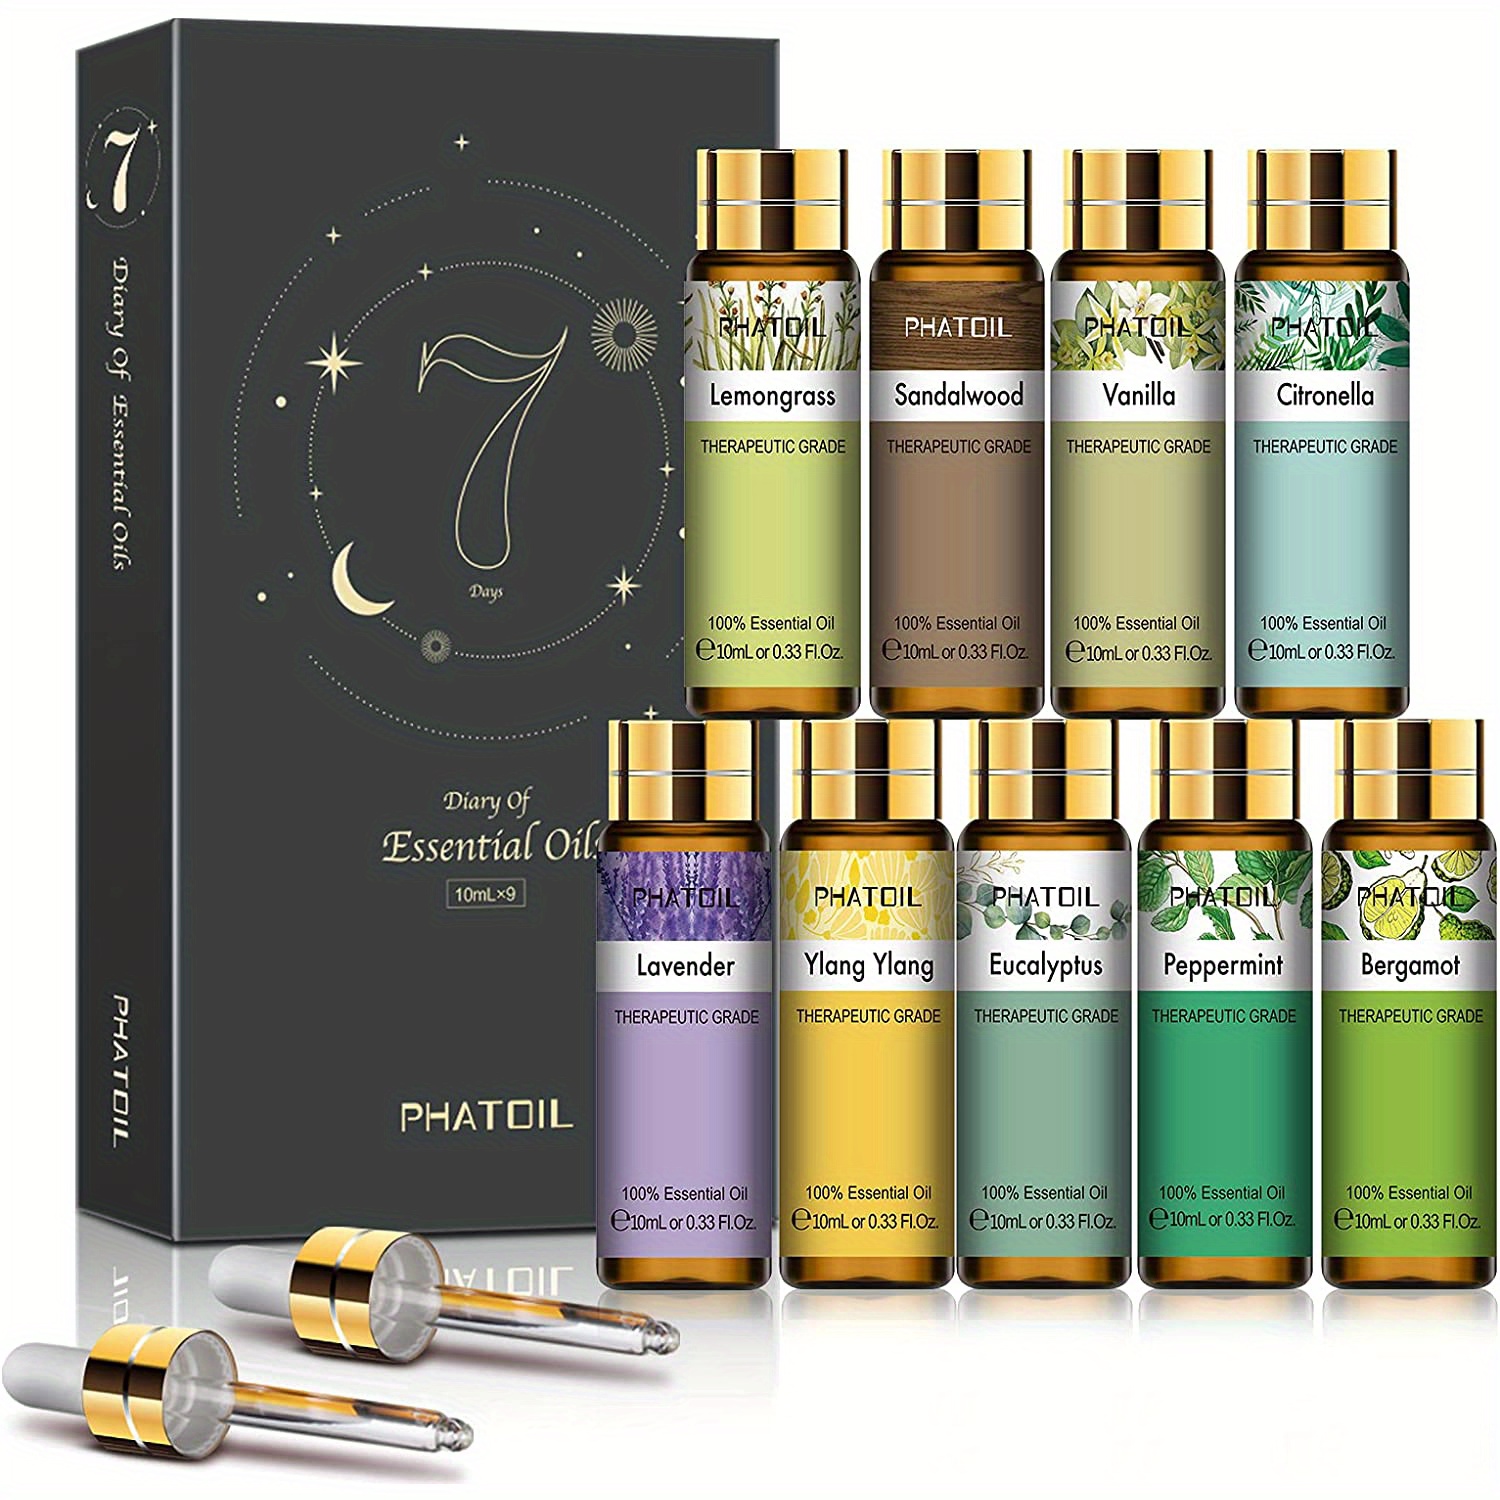 Far East Set of 6 Premium Grade Fragrance Oils - Ylang Ylang, Green Tea, Lotus Blossom, Orchid, Bamboo, Peony